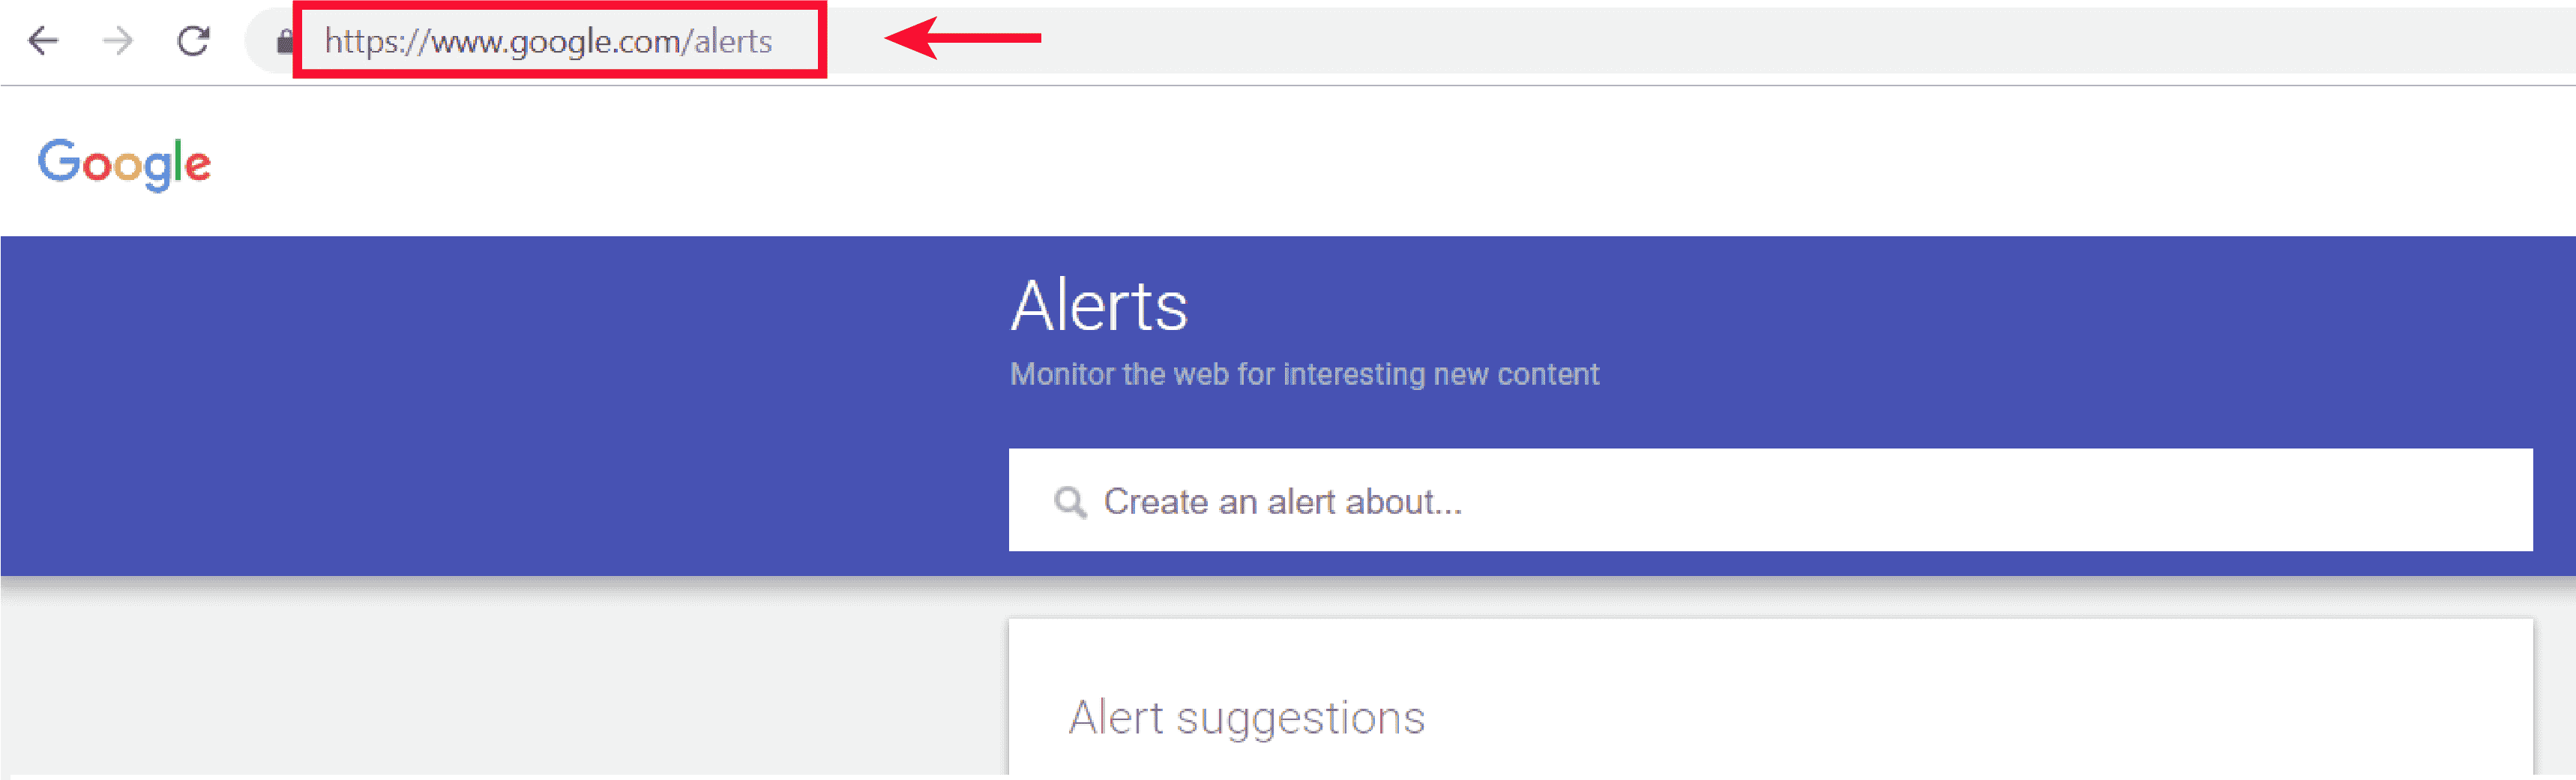 seo clients - google alerts